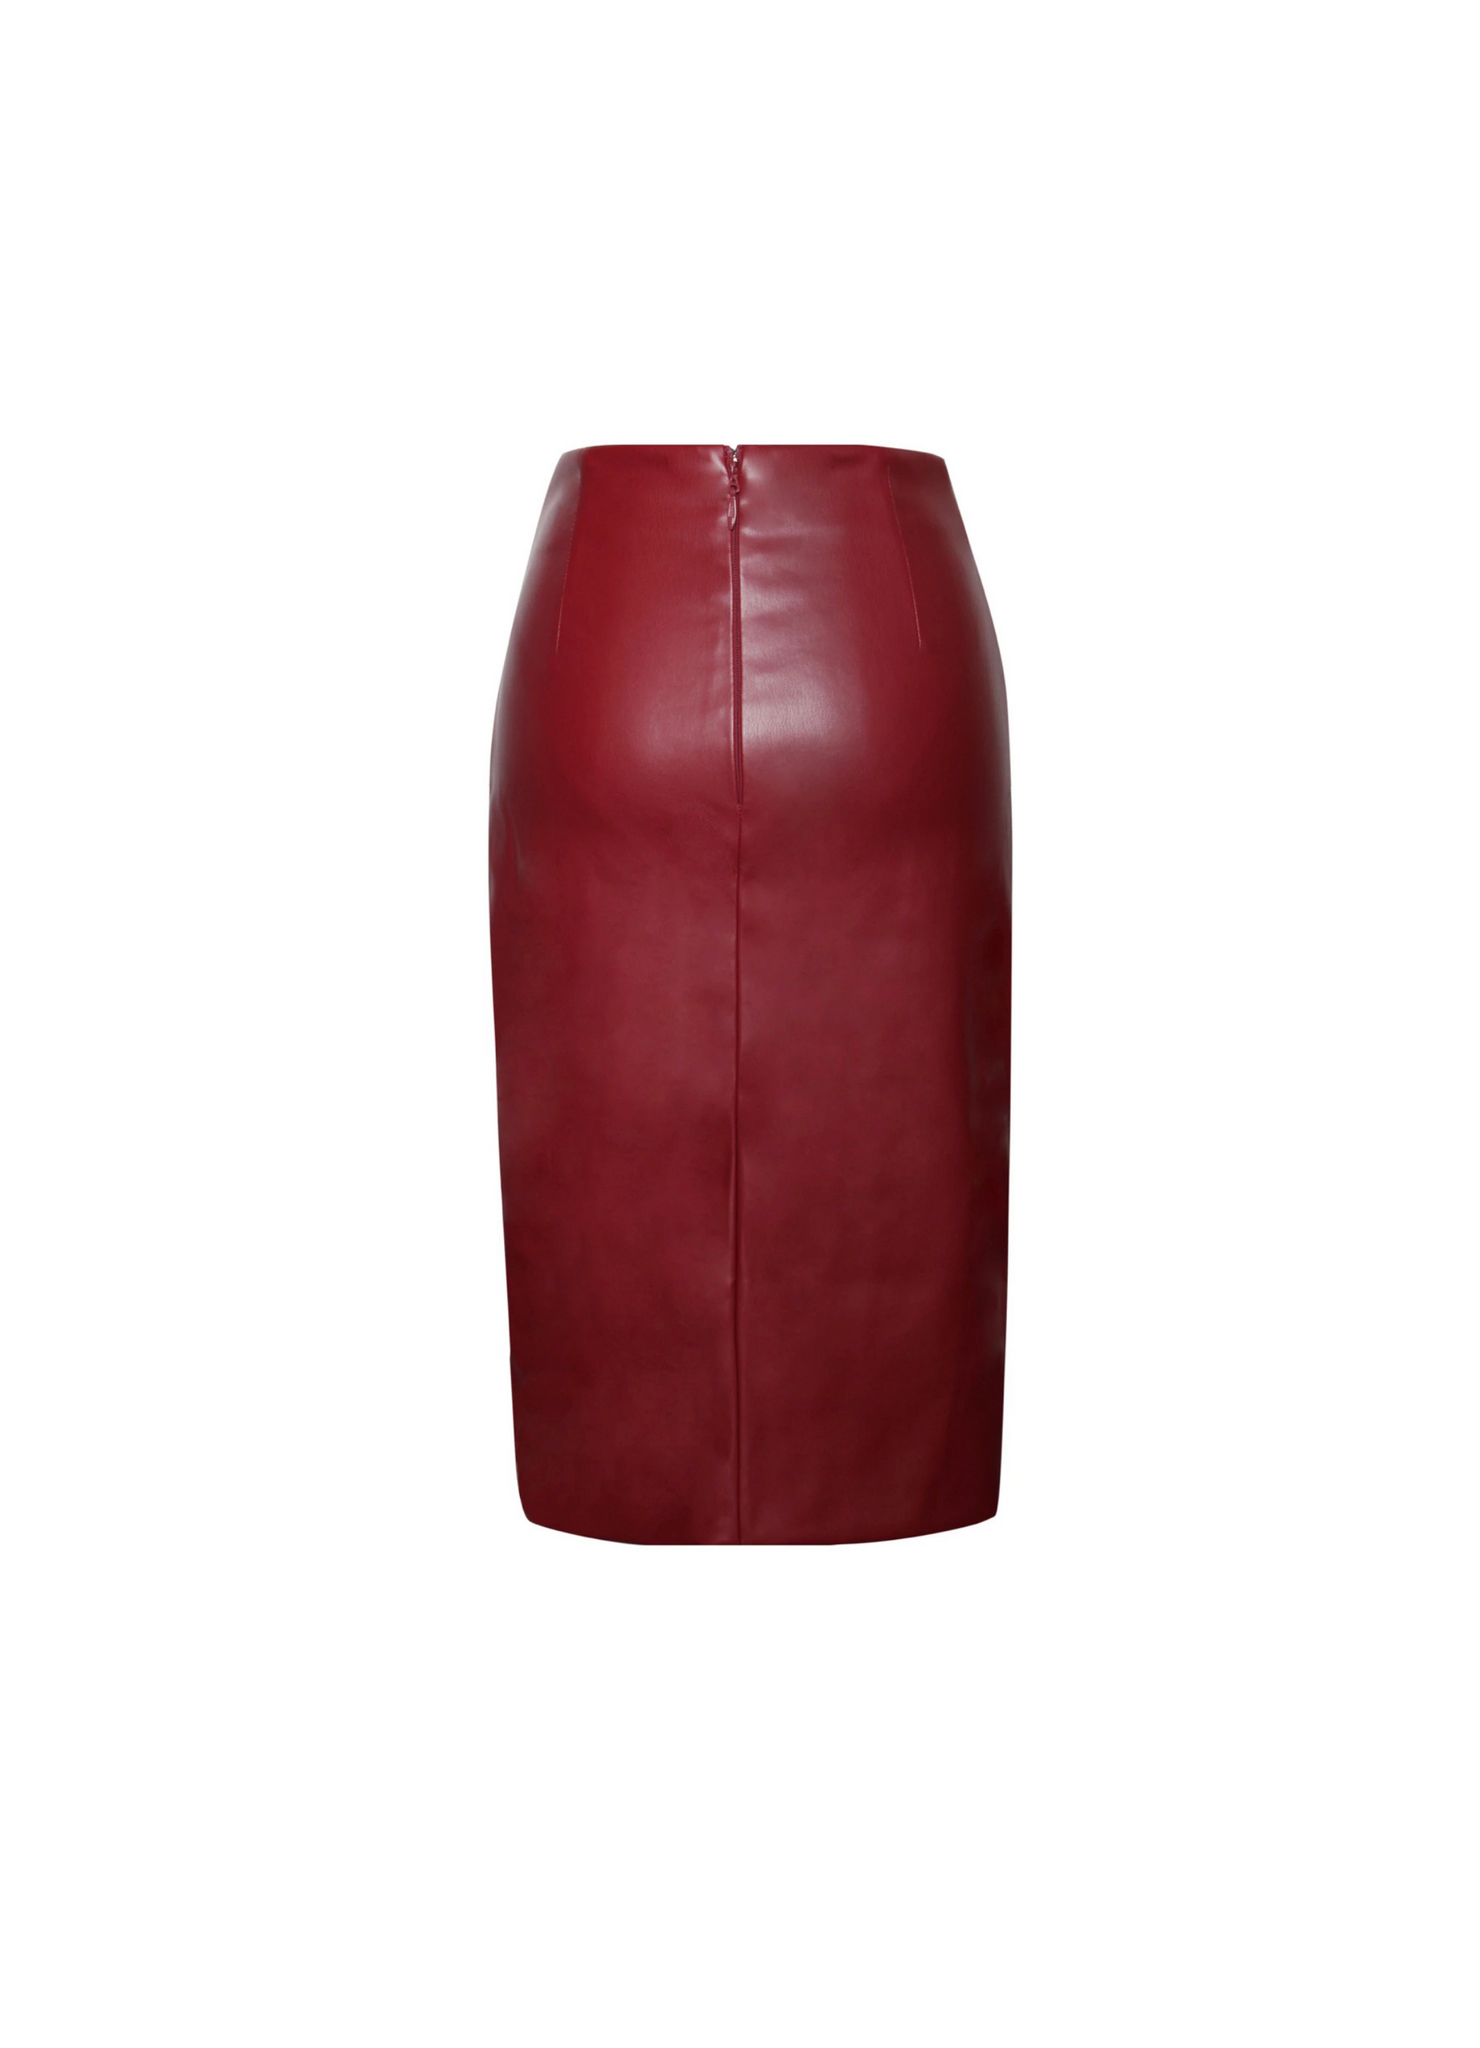 Mireya Wine Red Vegan Leather Pencil Skirt